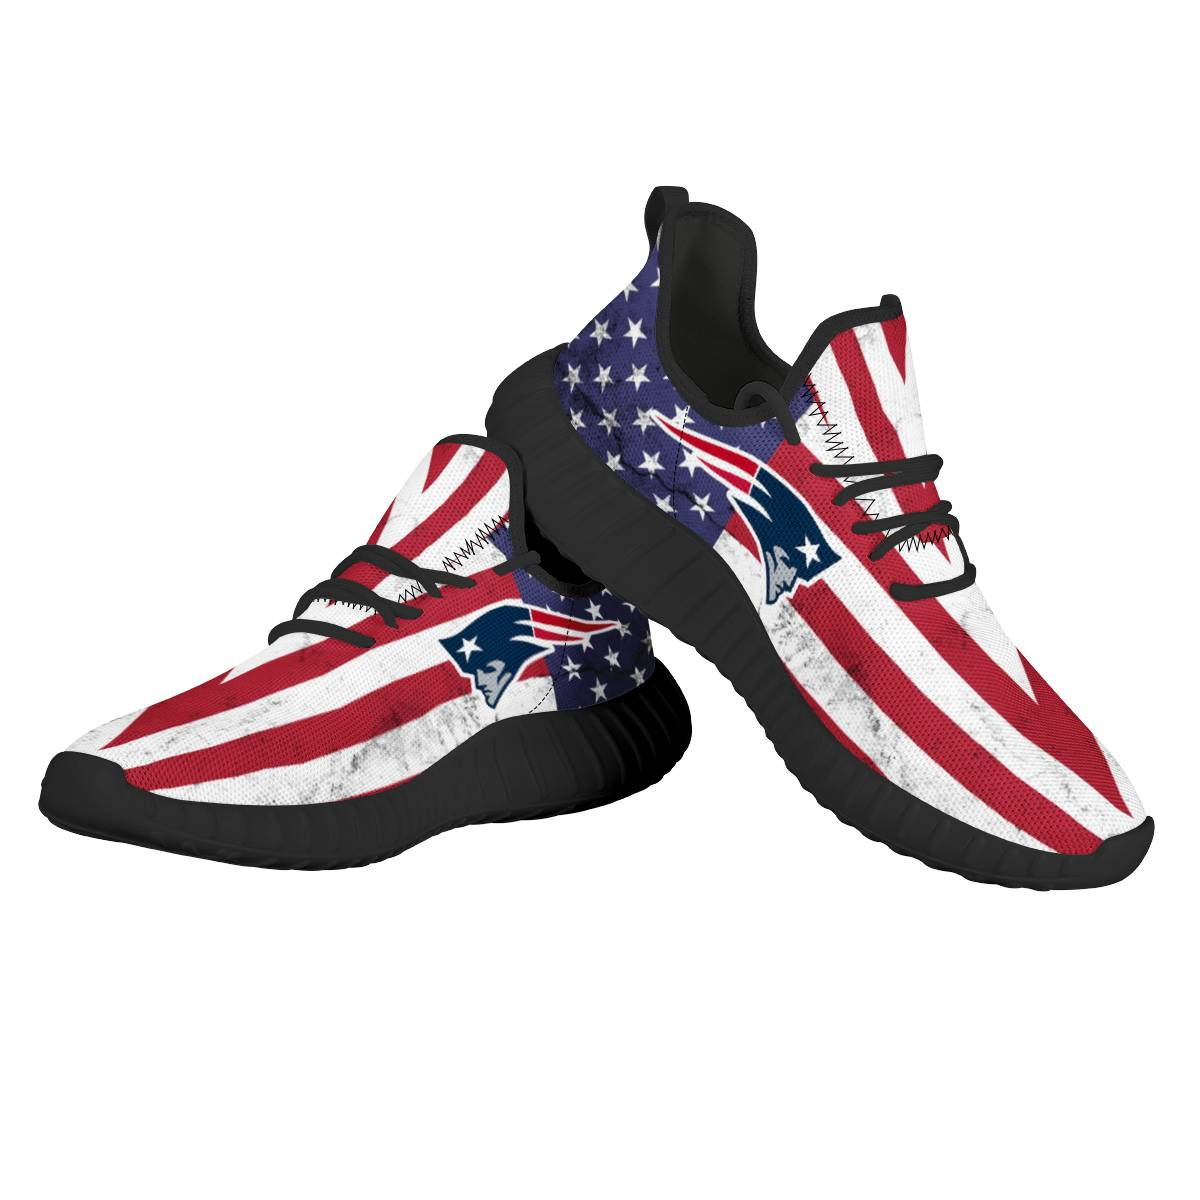 Men's NFL New England Patriots Mesh Knit Sneakers/Shoes 004